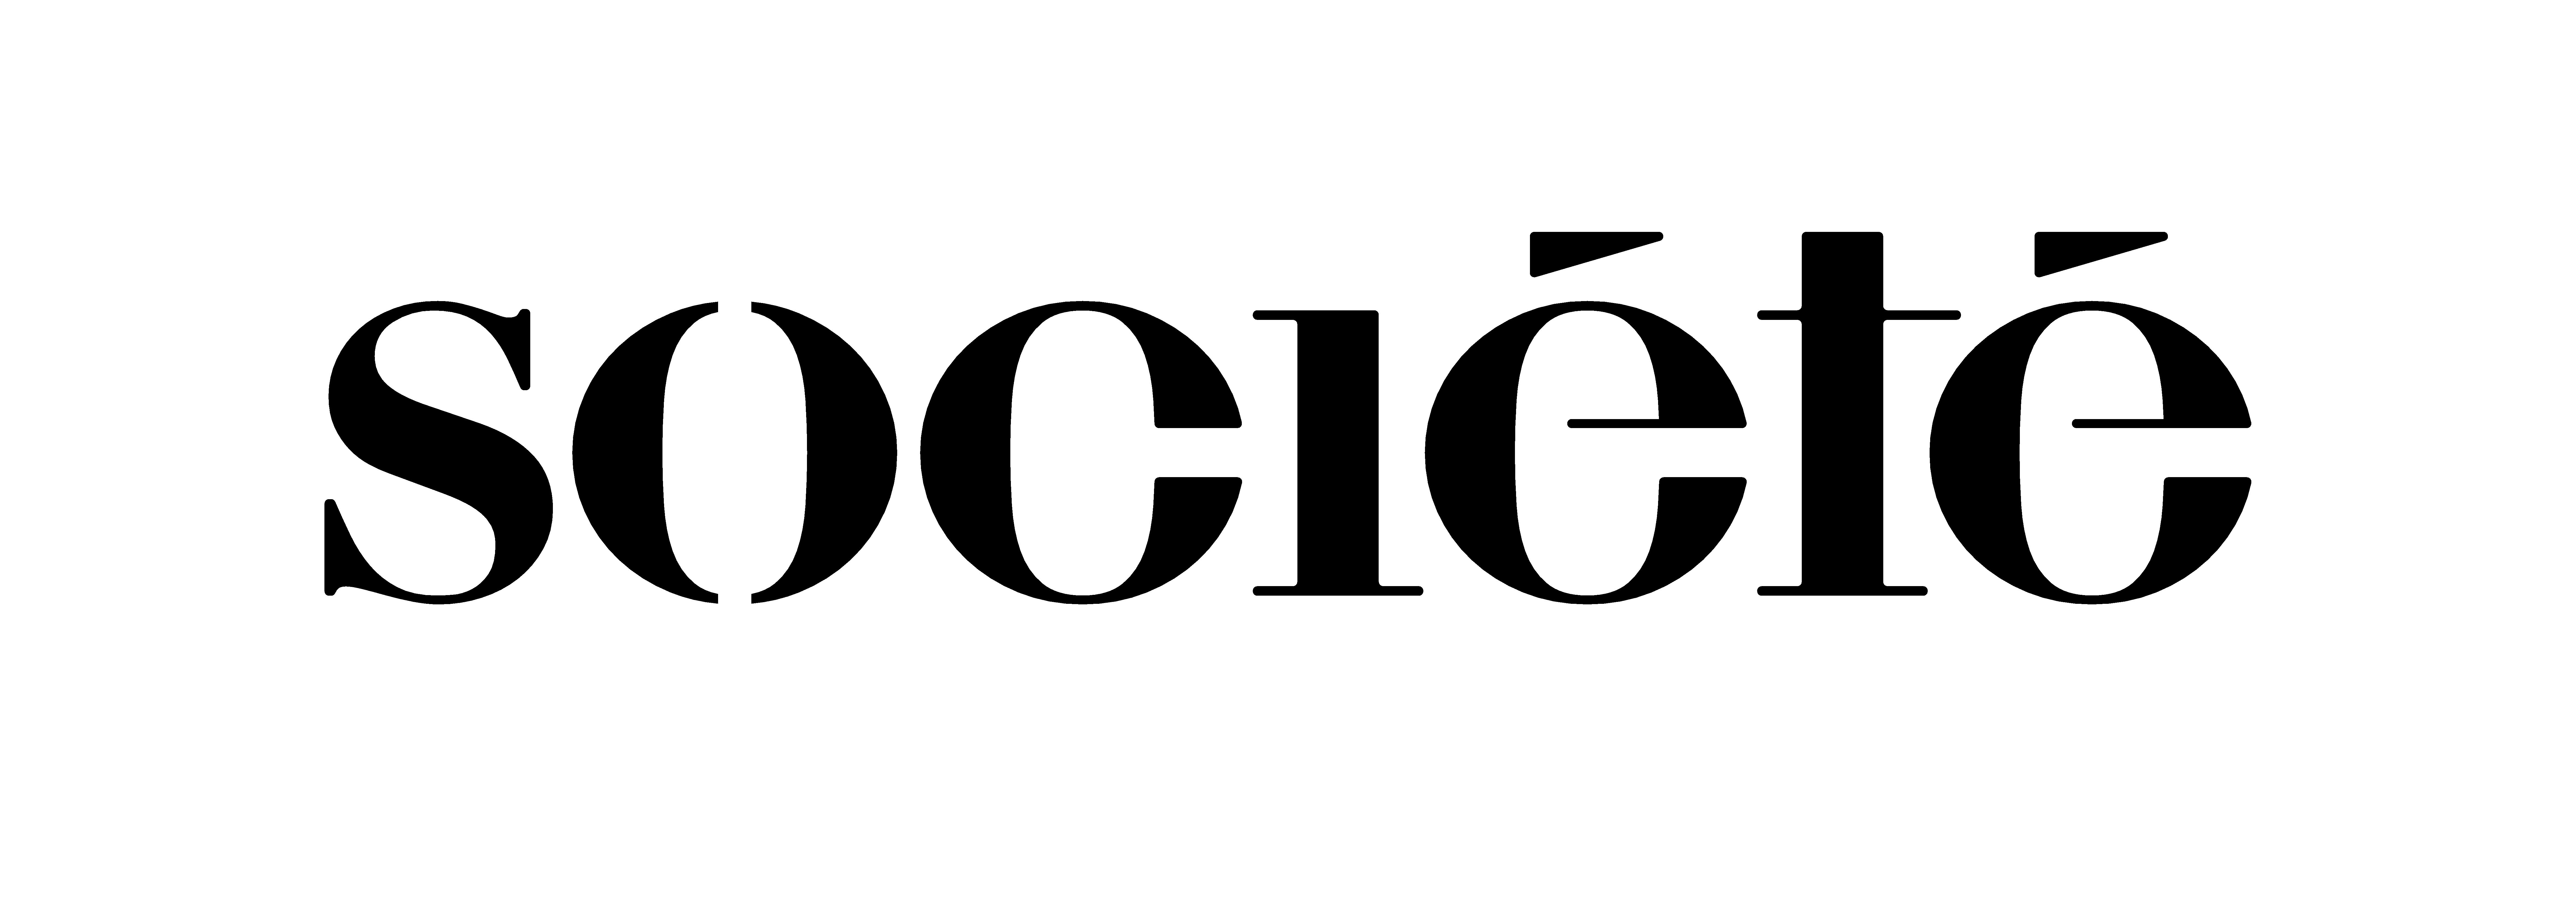 societe_logo-page-001.jpg